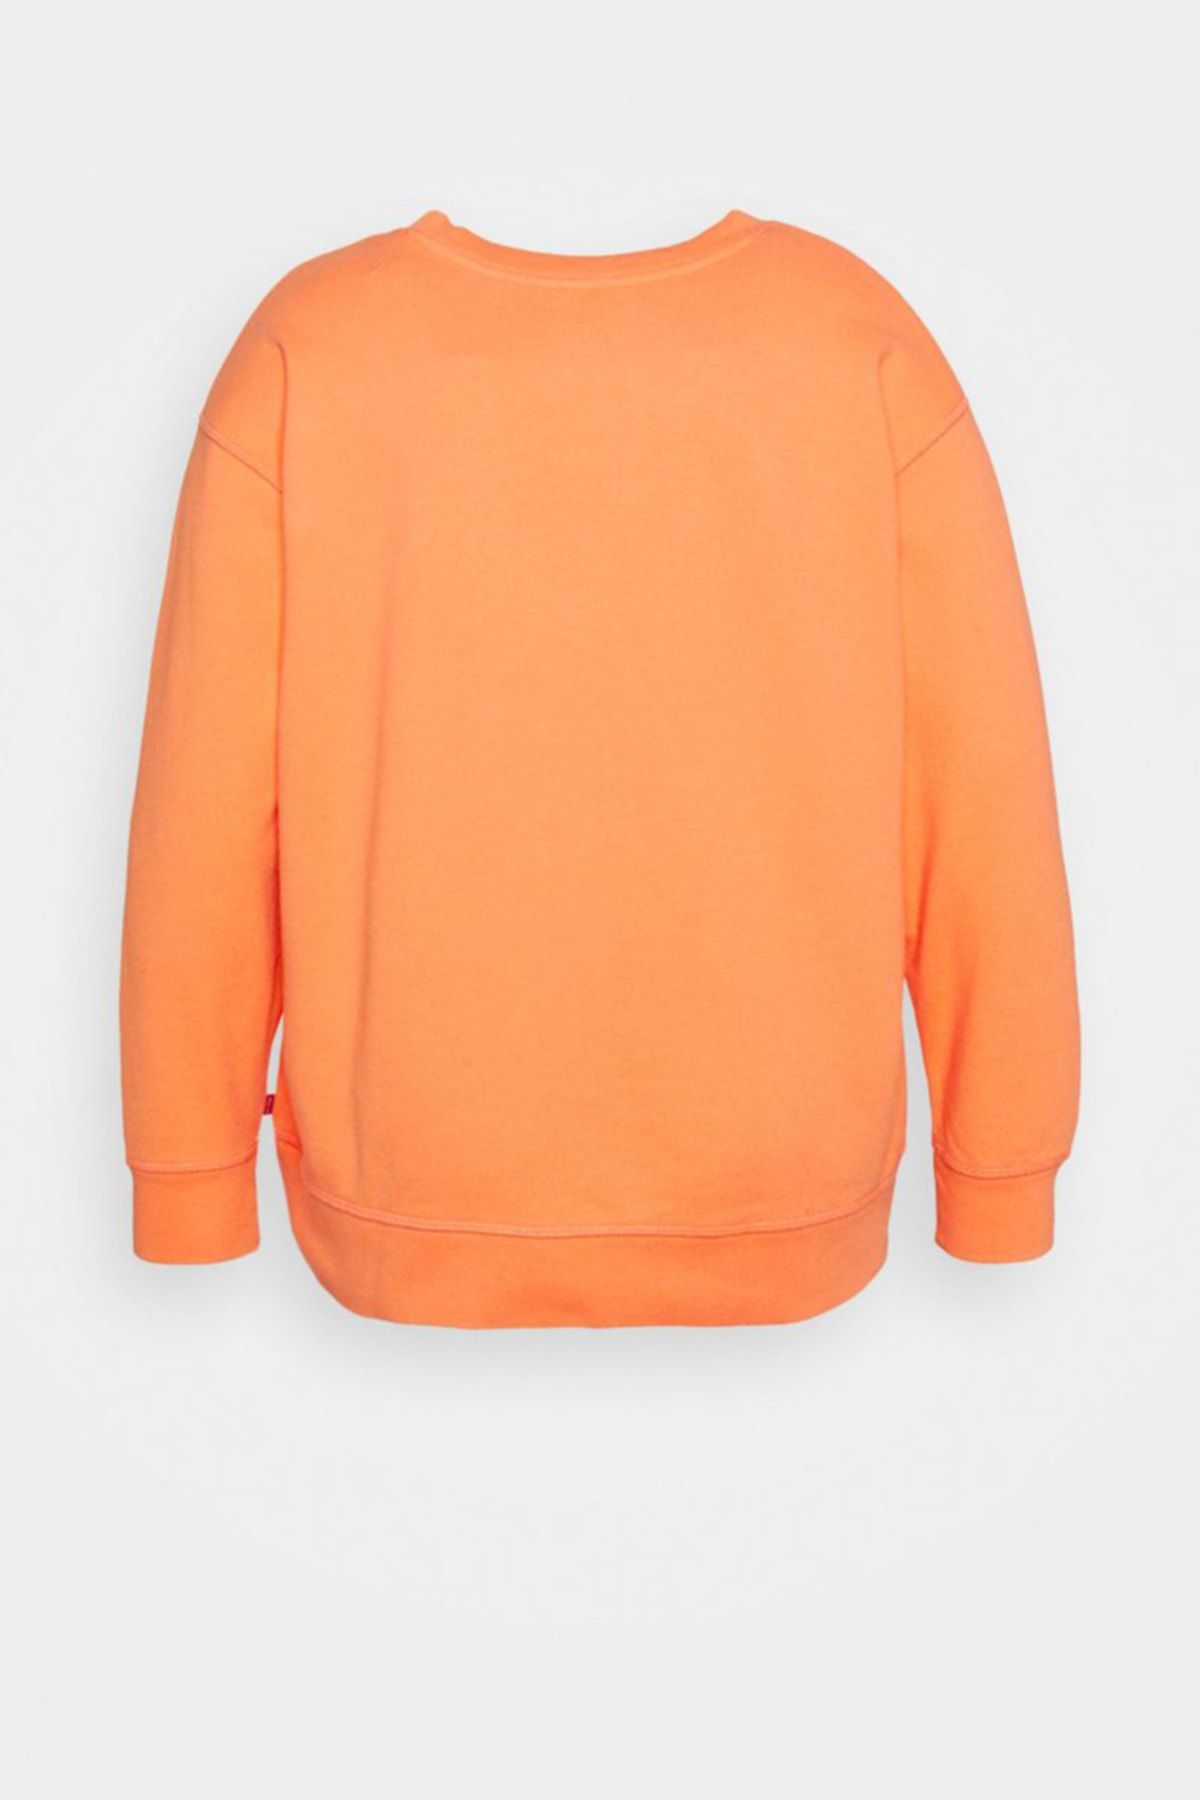 - - Sweatshirt Levi\'s Orange fit Regular Trendyol -